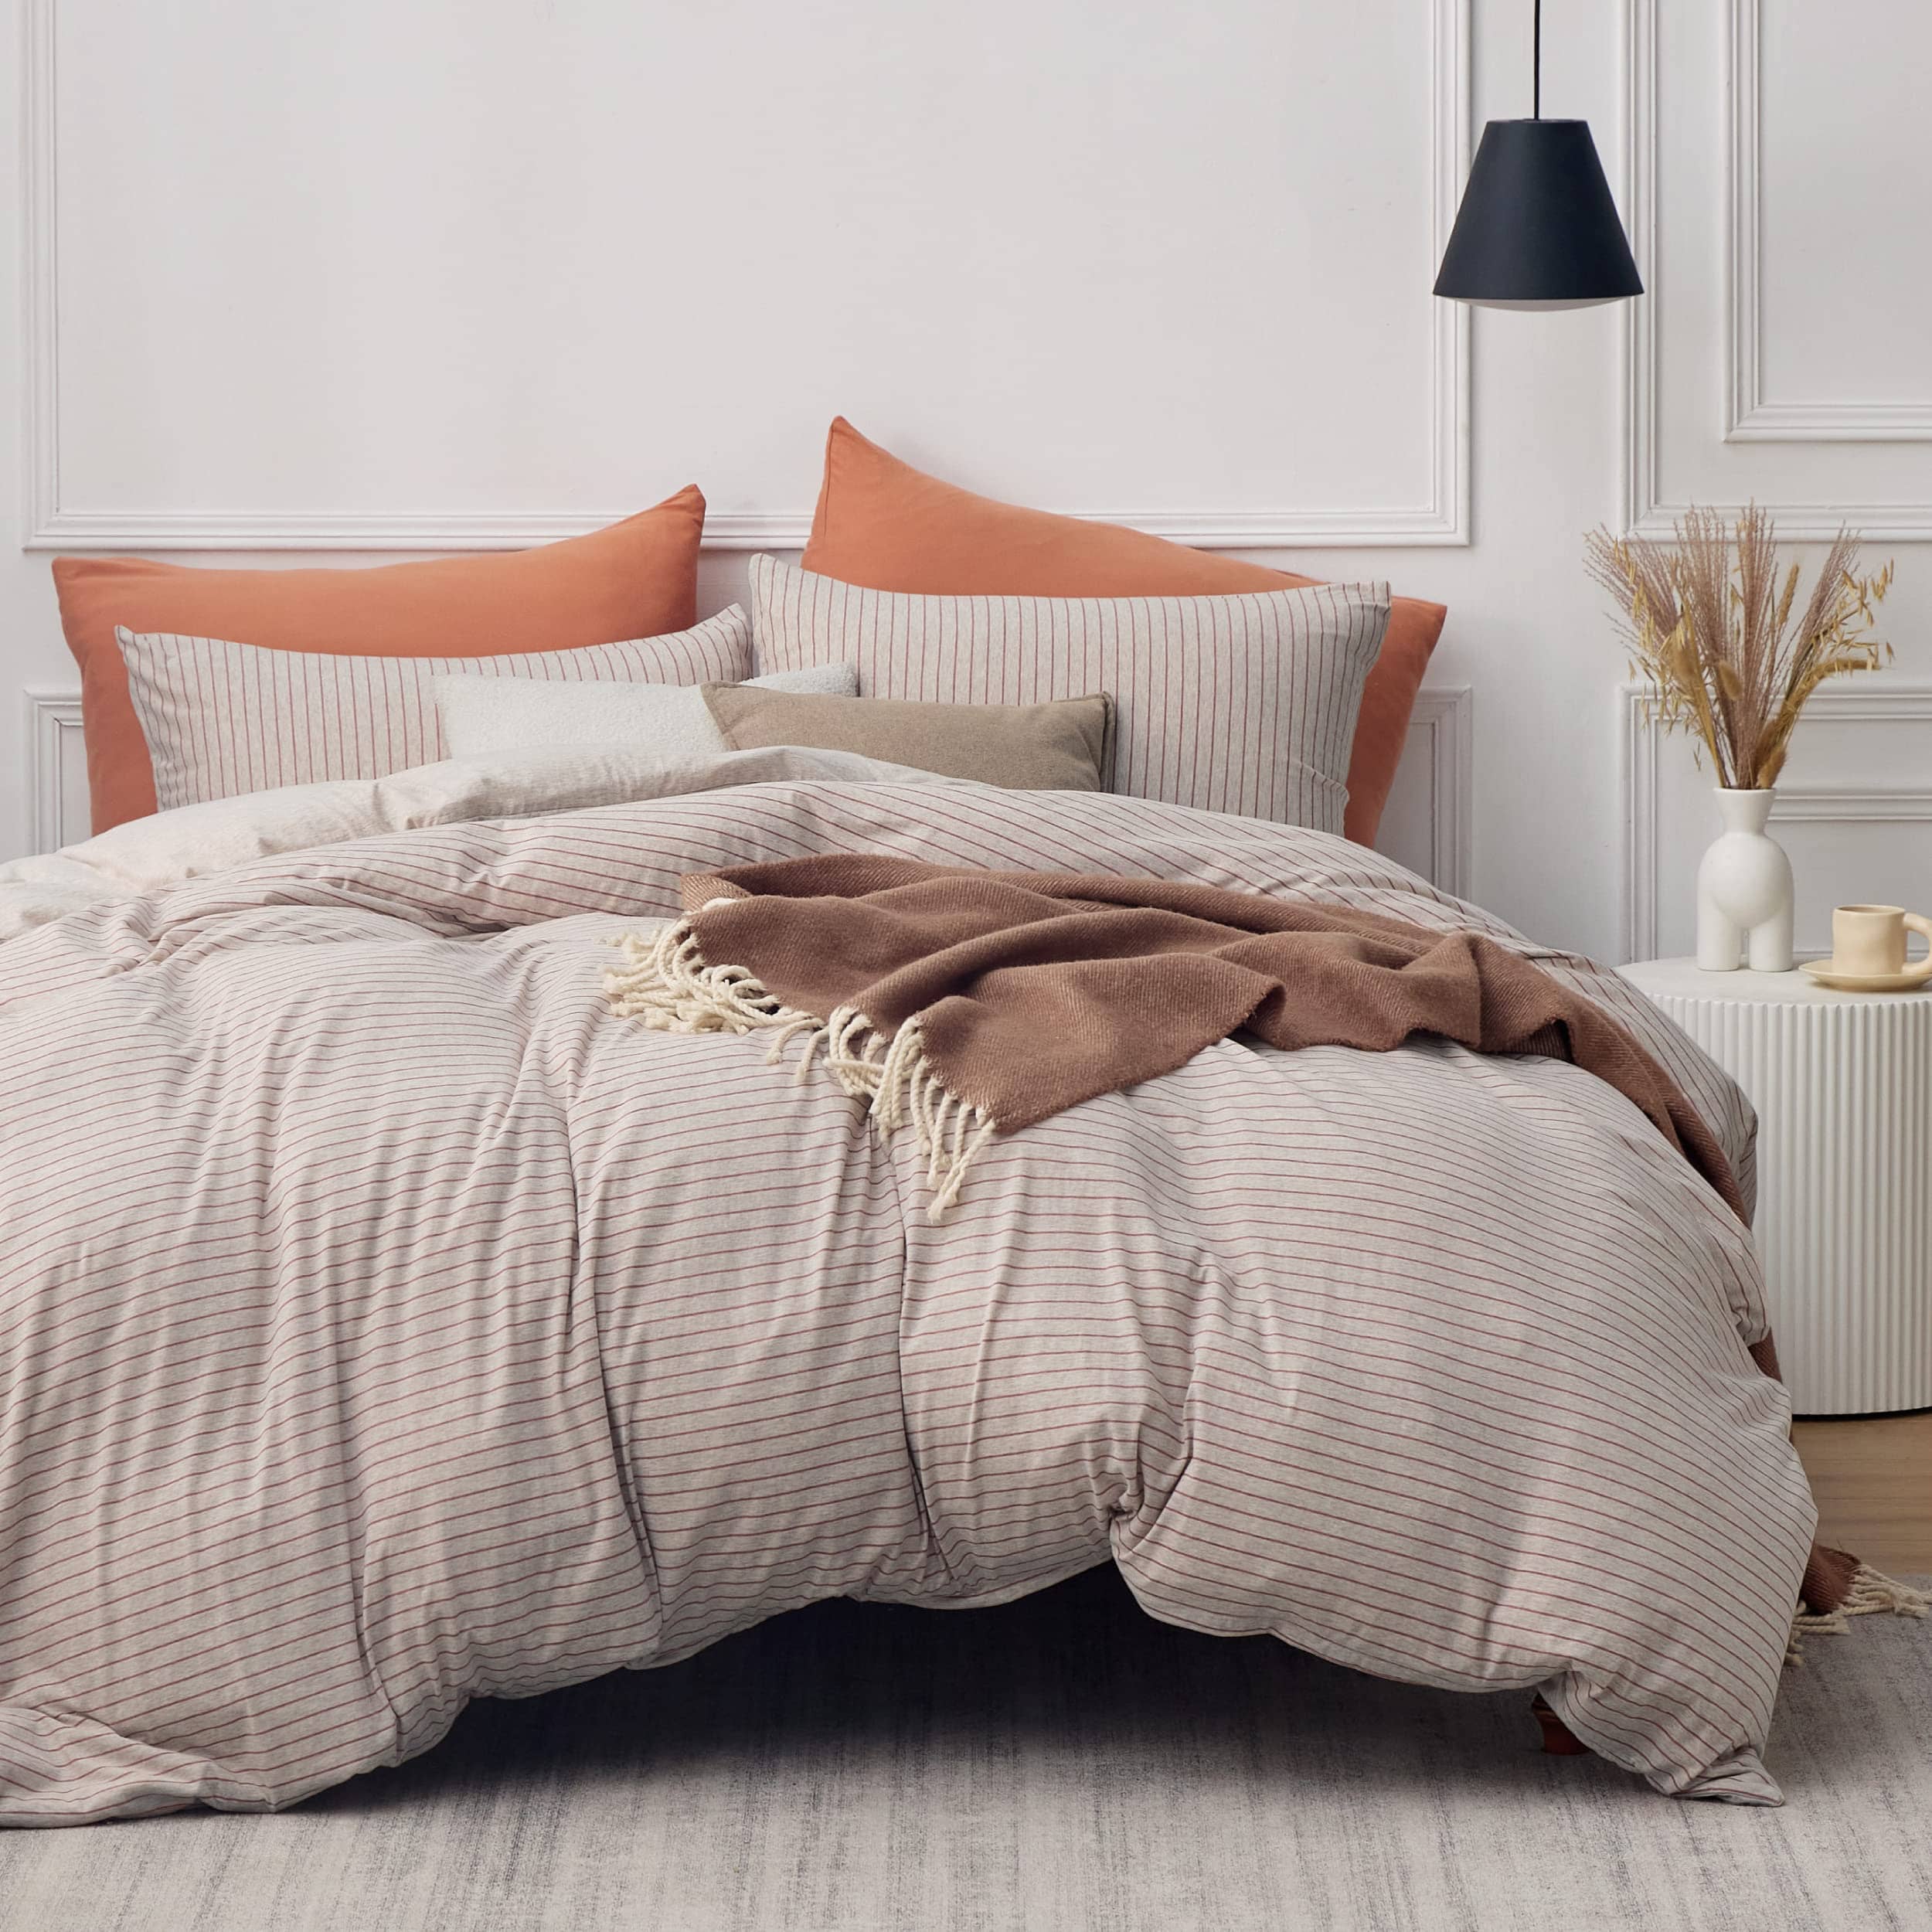 Bedsure Linen Duvet Cover King - Linen Cotton Blend Duvet Cover Set, Linen  Color, 3 Pieces, 1 Duvet Cover 104 x 90 Inches and 2 Pillowcases, Comforter